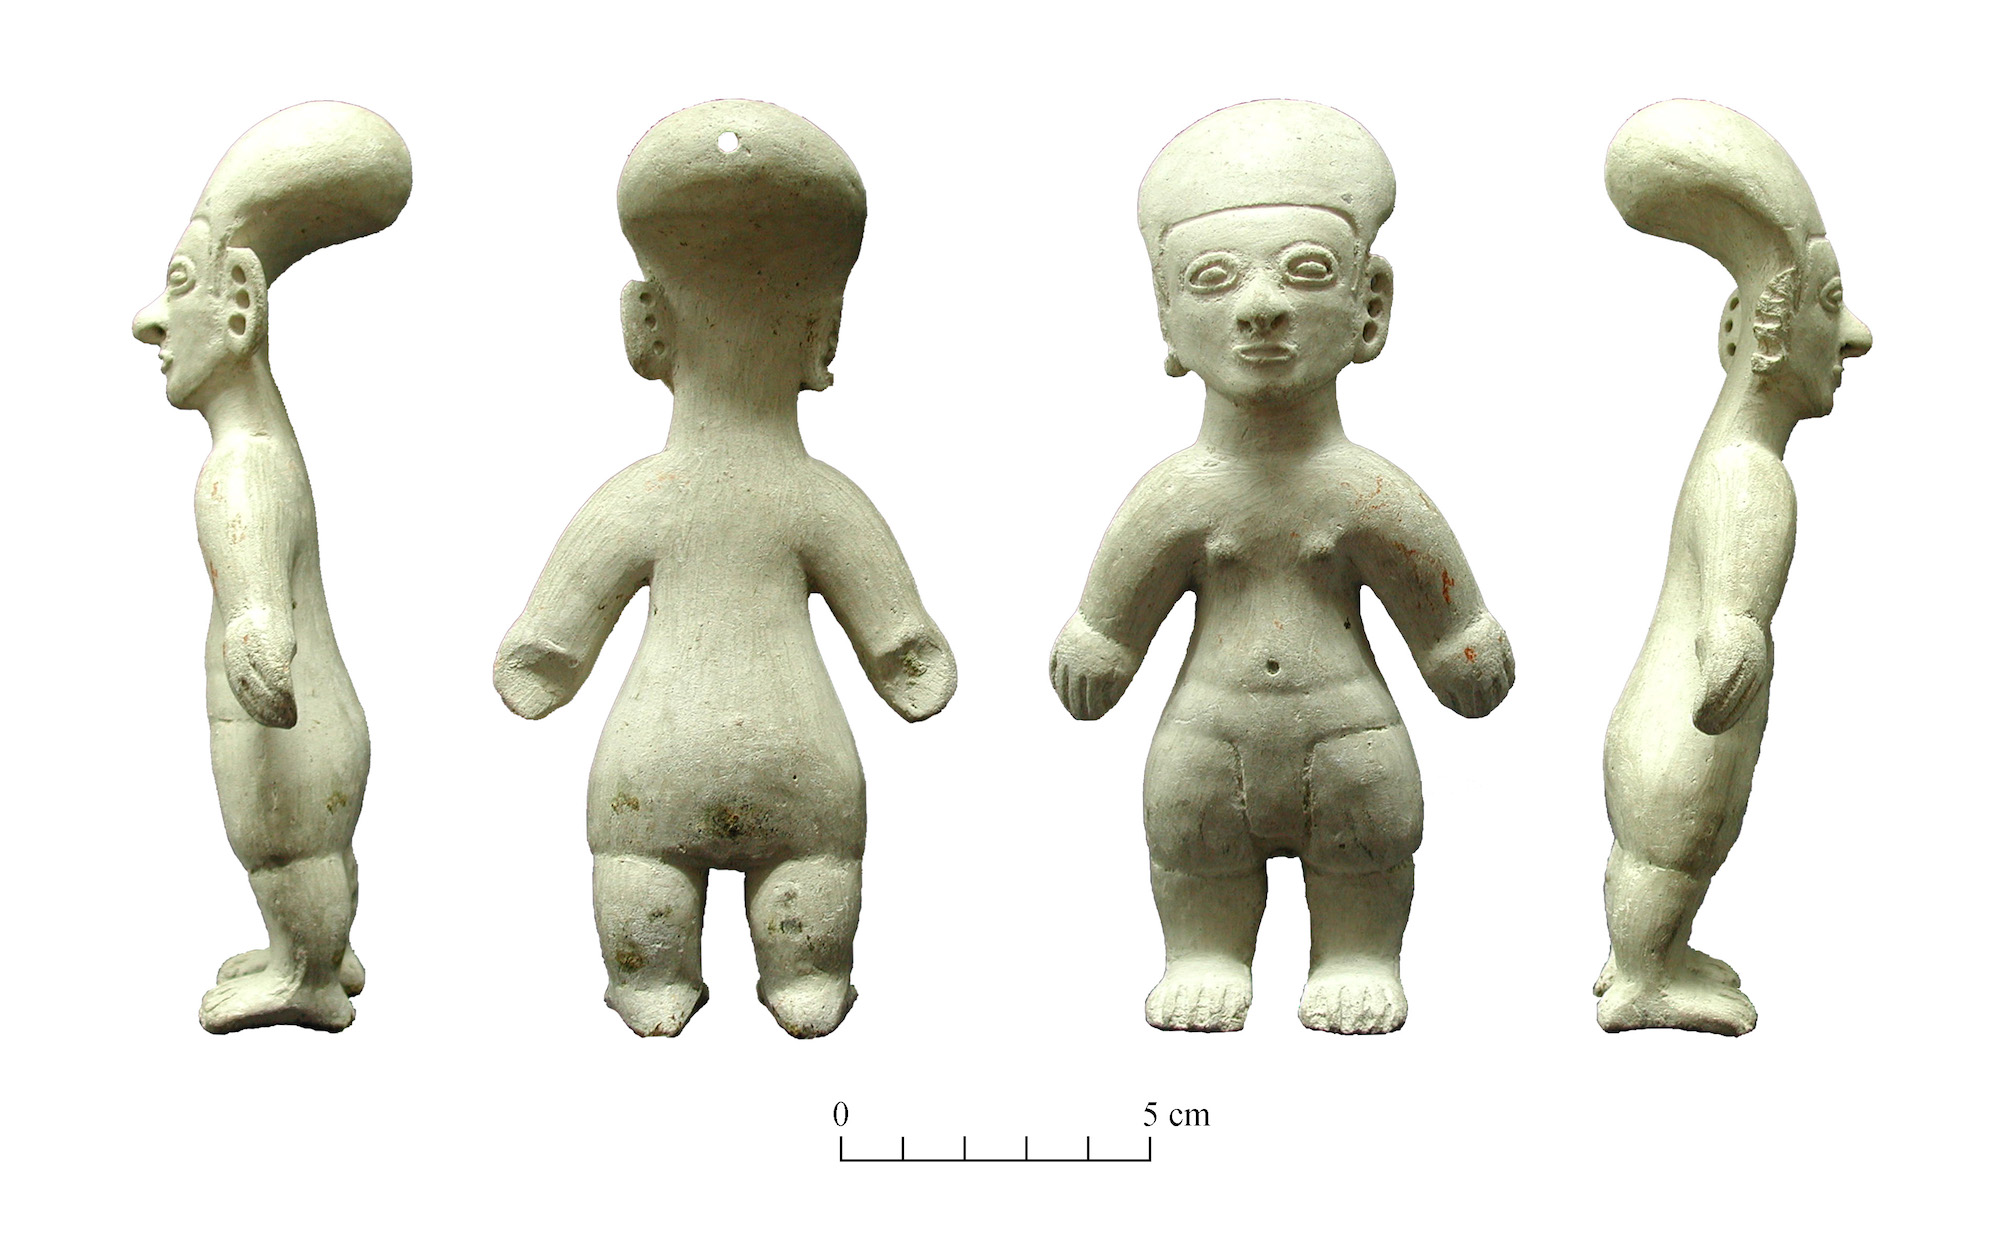 Indigenous Girl - 15 inch Baby Doll - Toy Sense